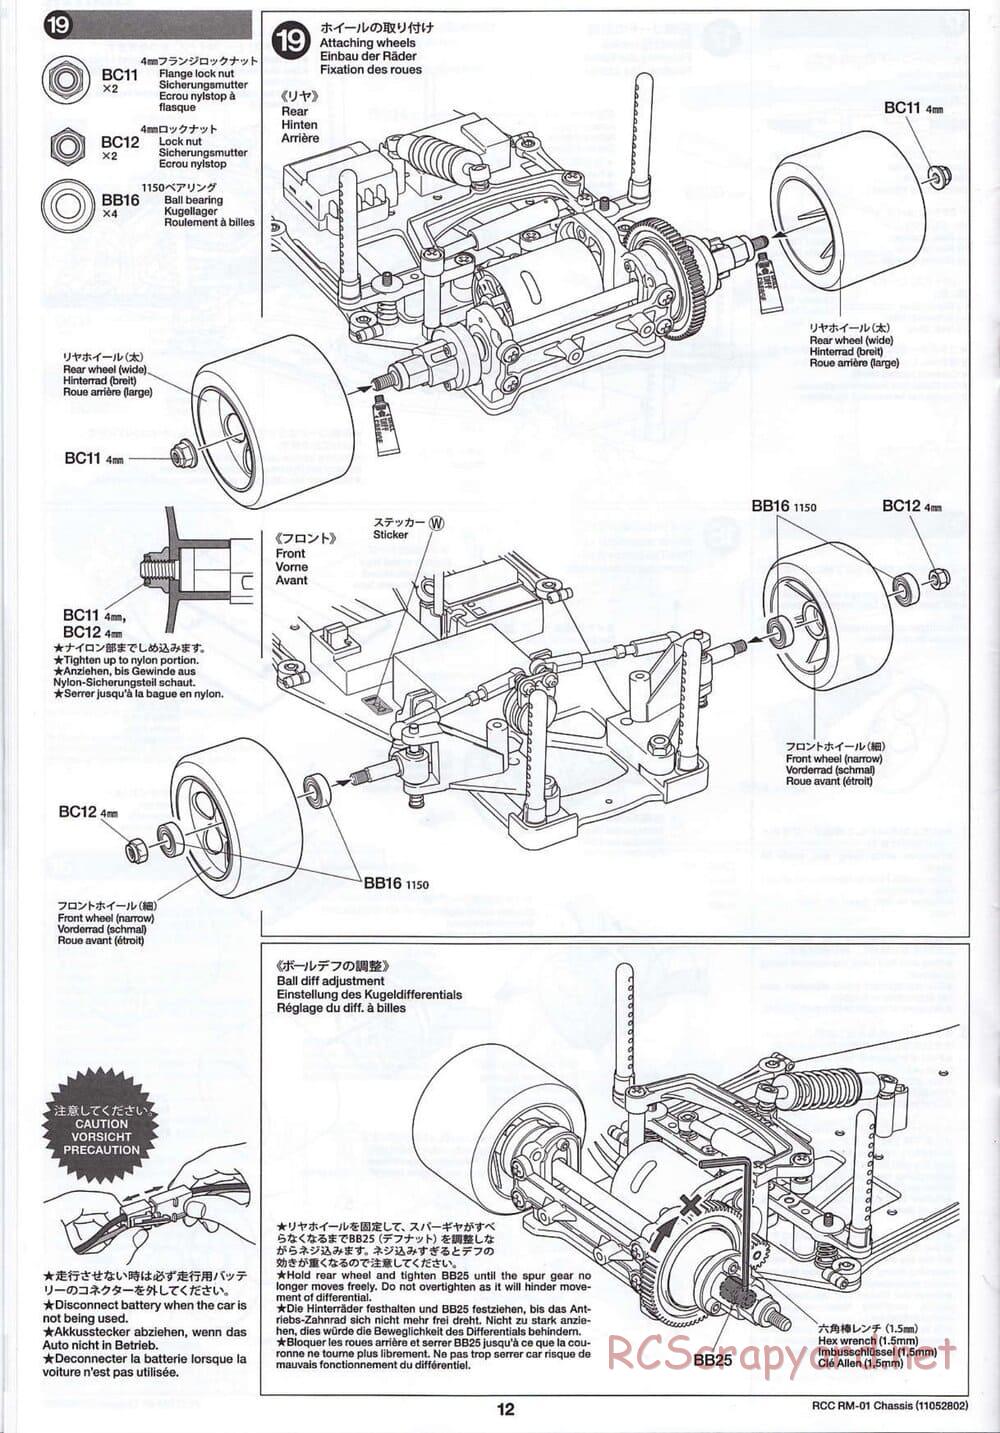 Tamiya - RM-01 Chassis - Manual - Page 12